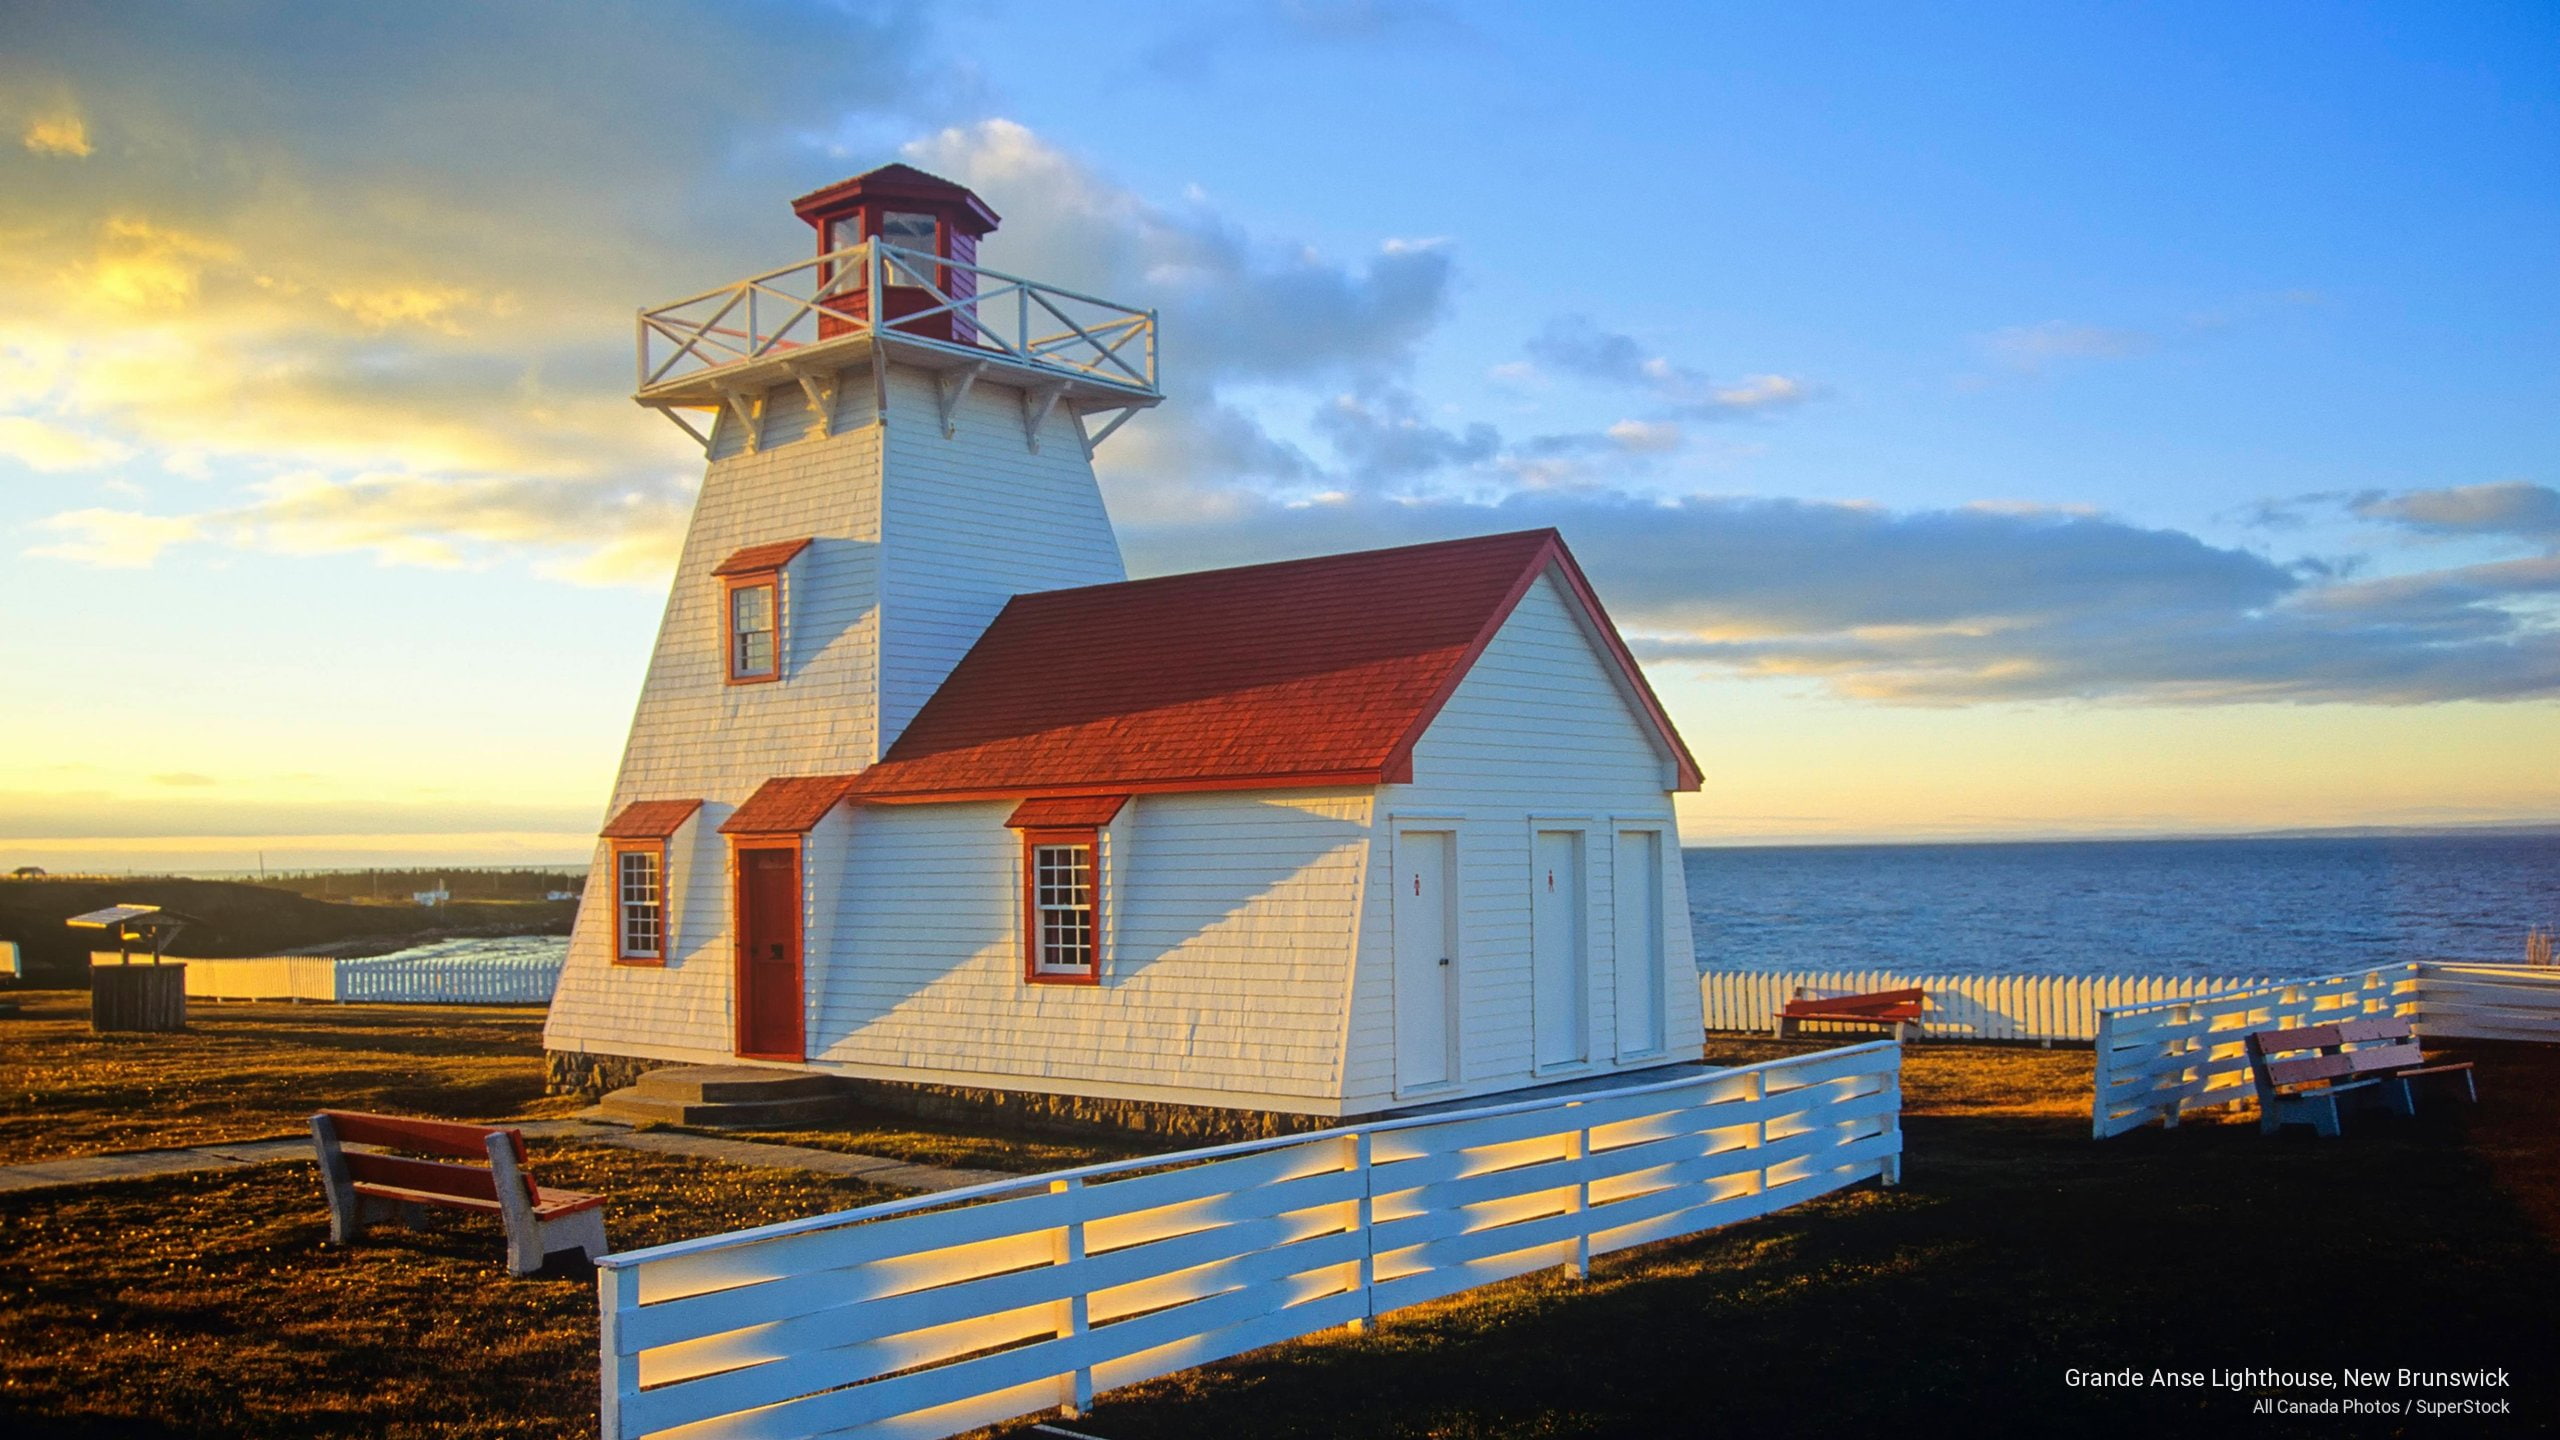 Grande Anse Lighthouse, New Brunswick, Architecture